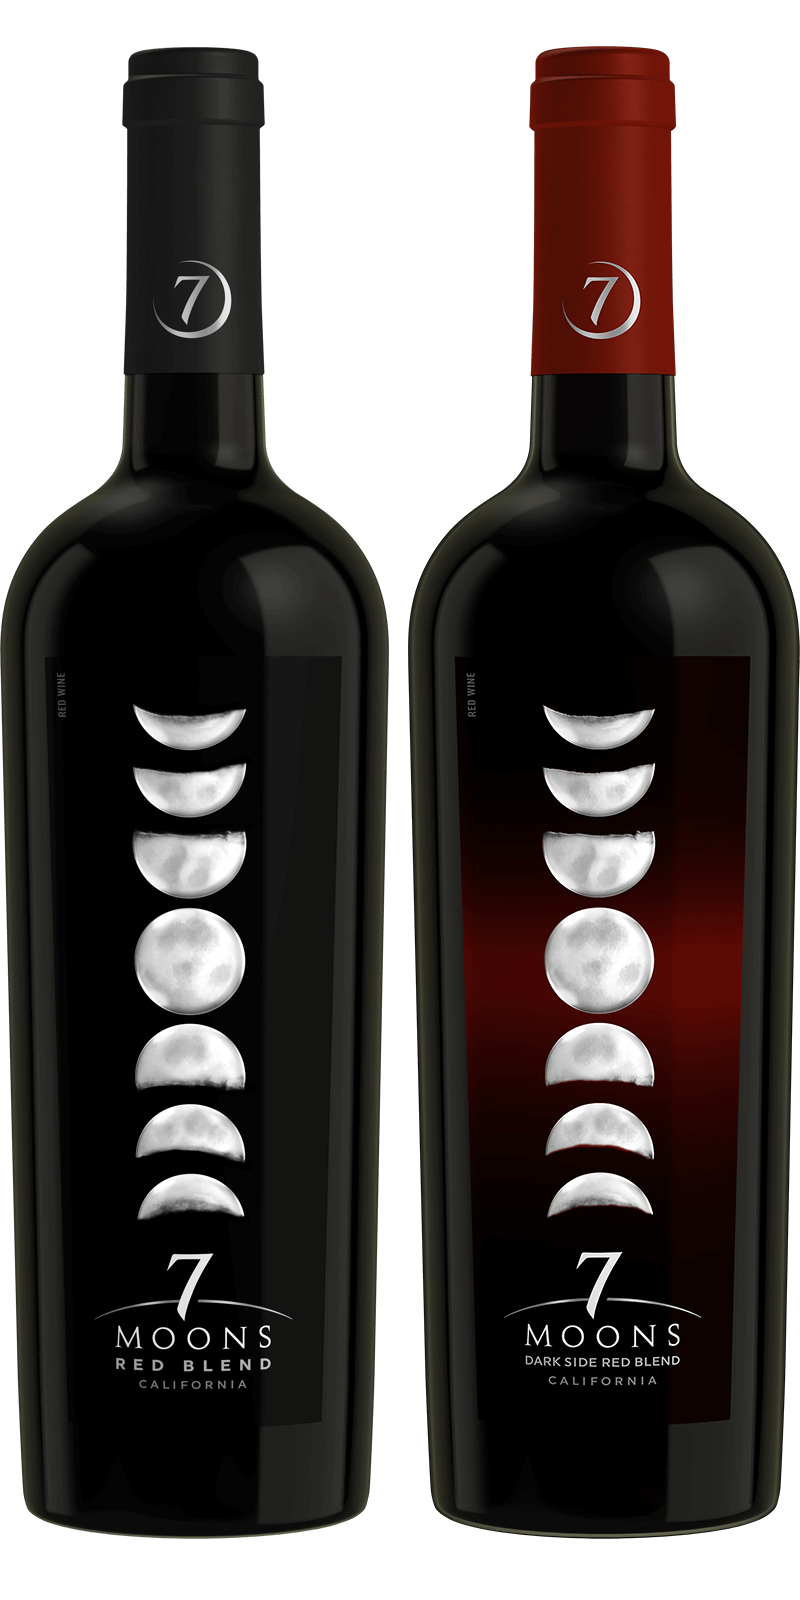 Wine bottles image